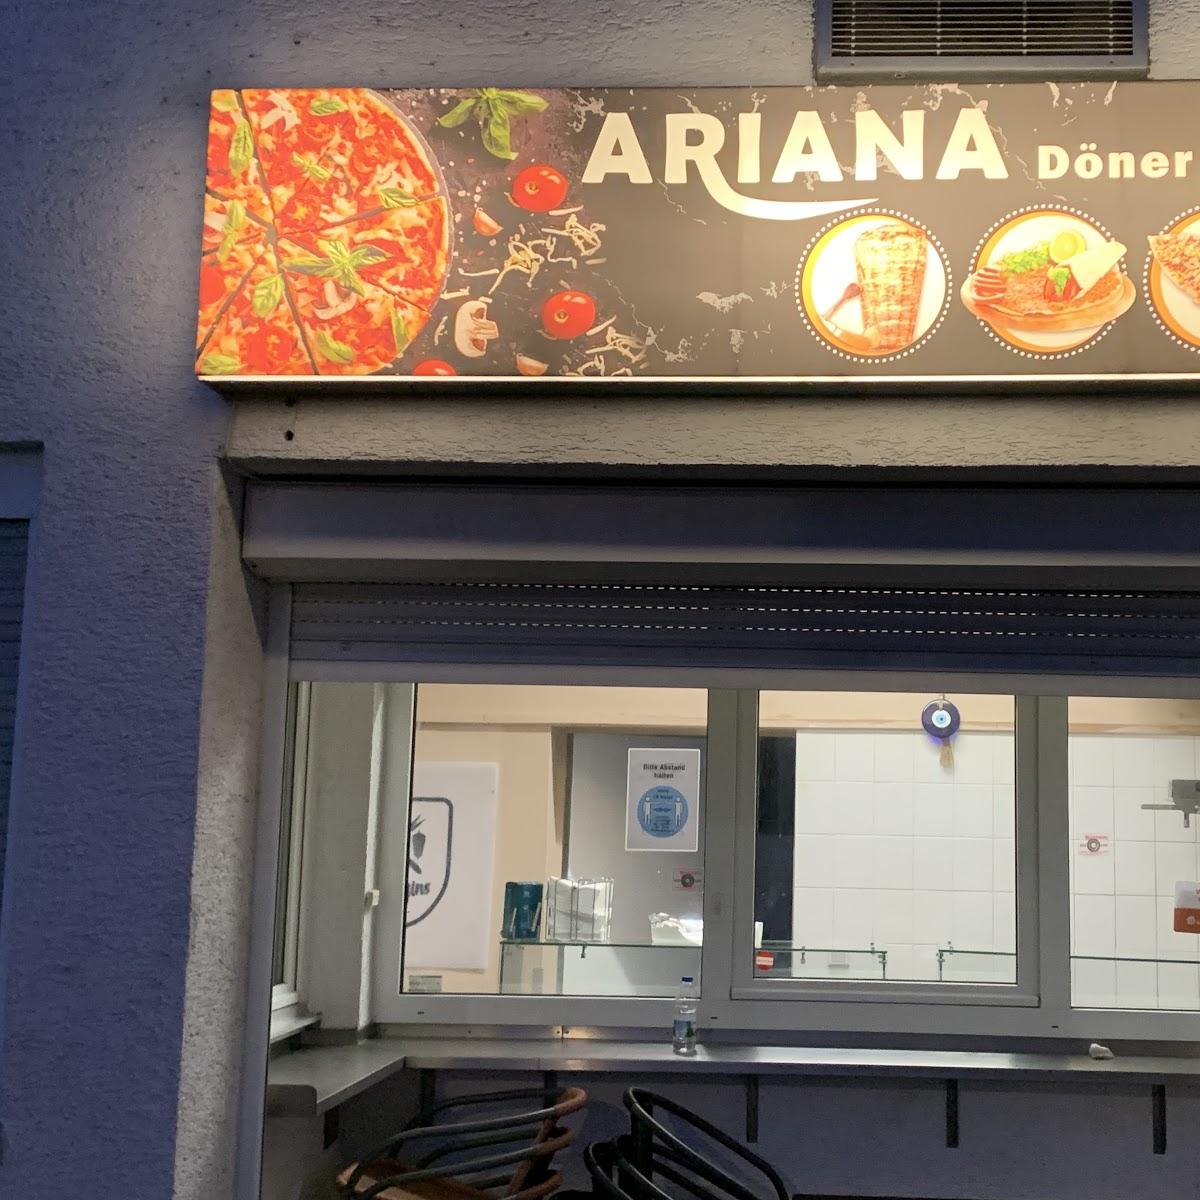 Restaurant "Ariana Döner Pizza" in Wiesbaden